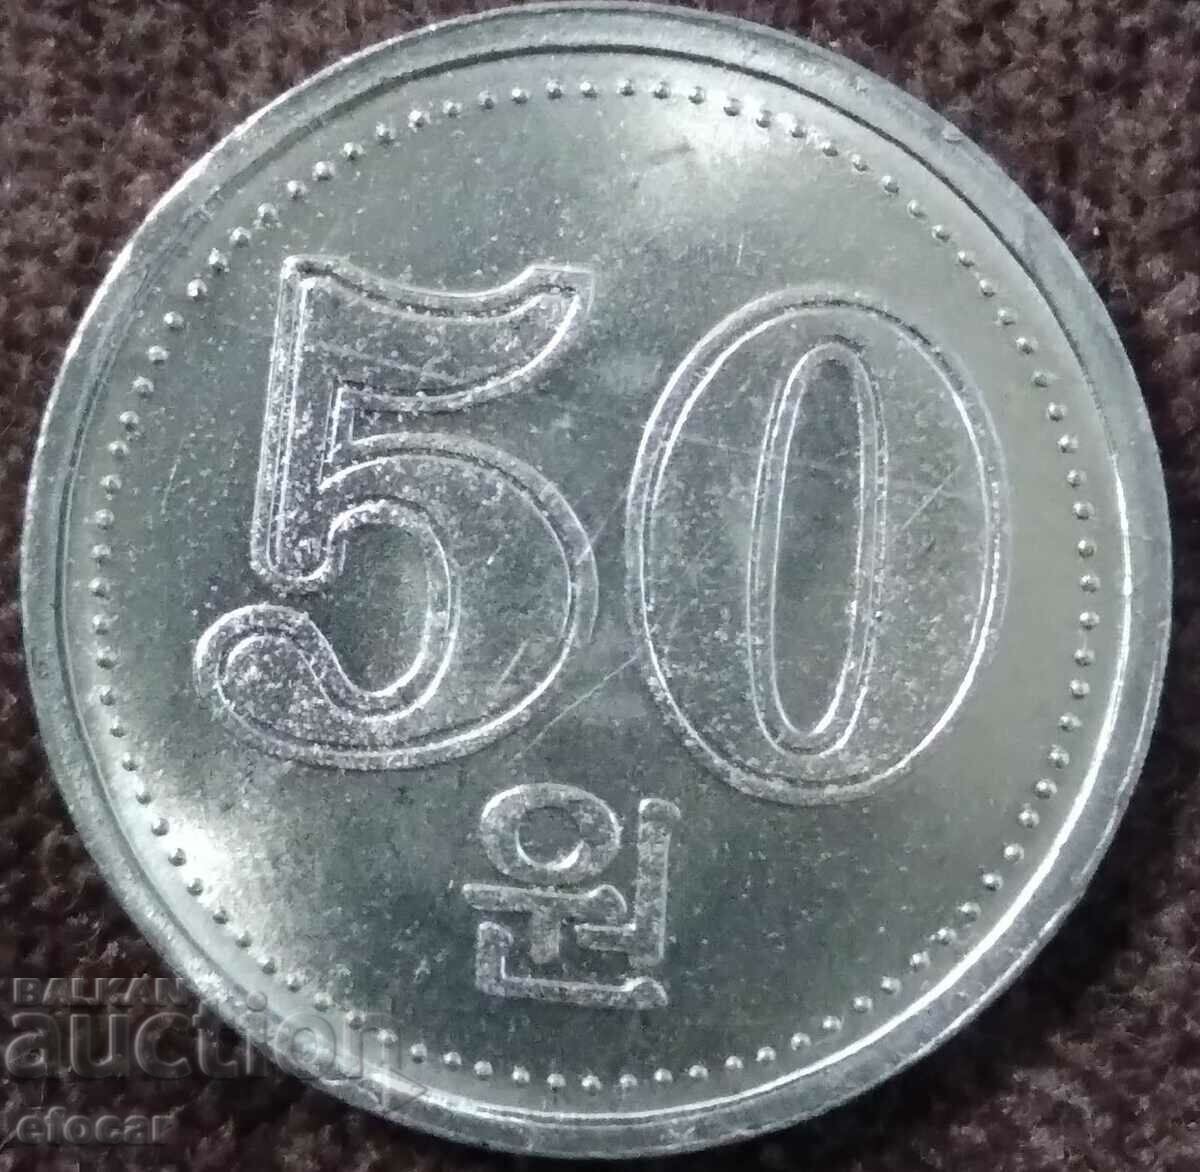 50 won North Korea 2005